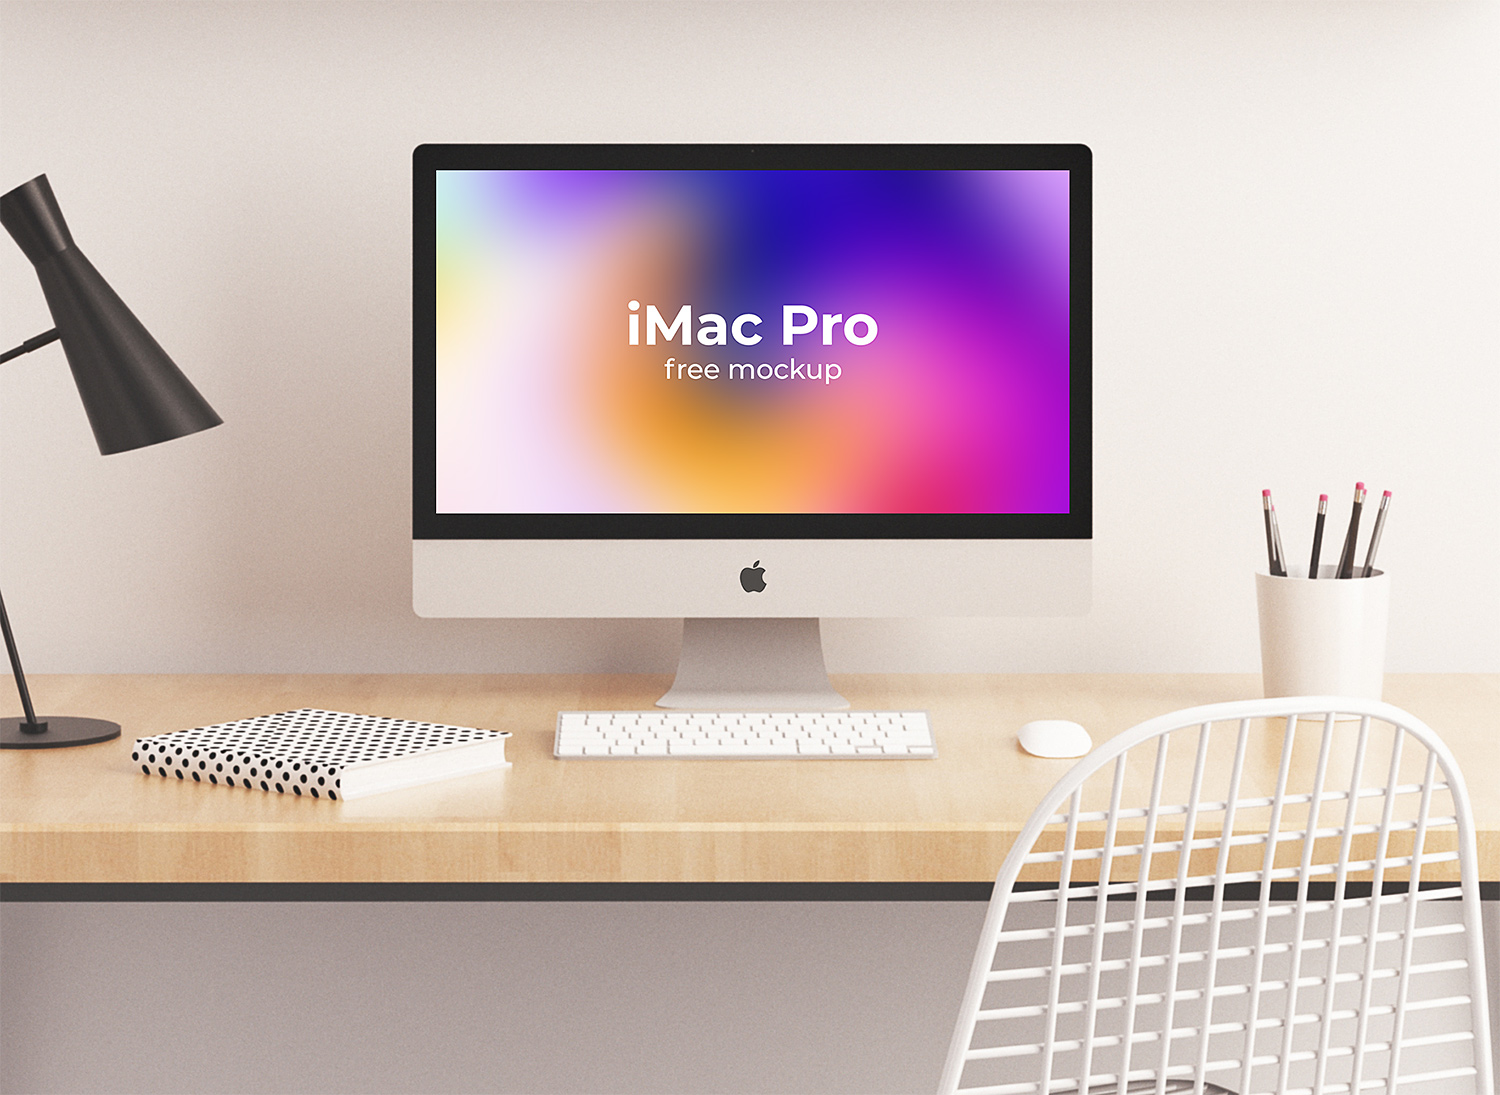 Download iMac Pro Mockup Free | Free Mockup